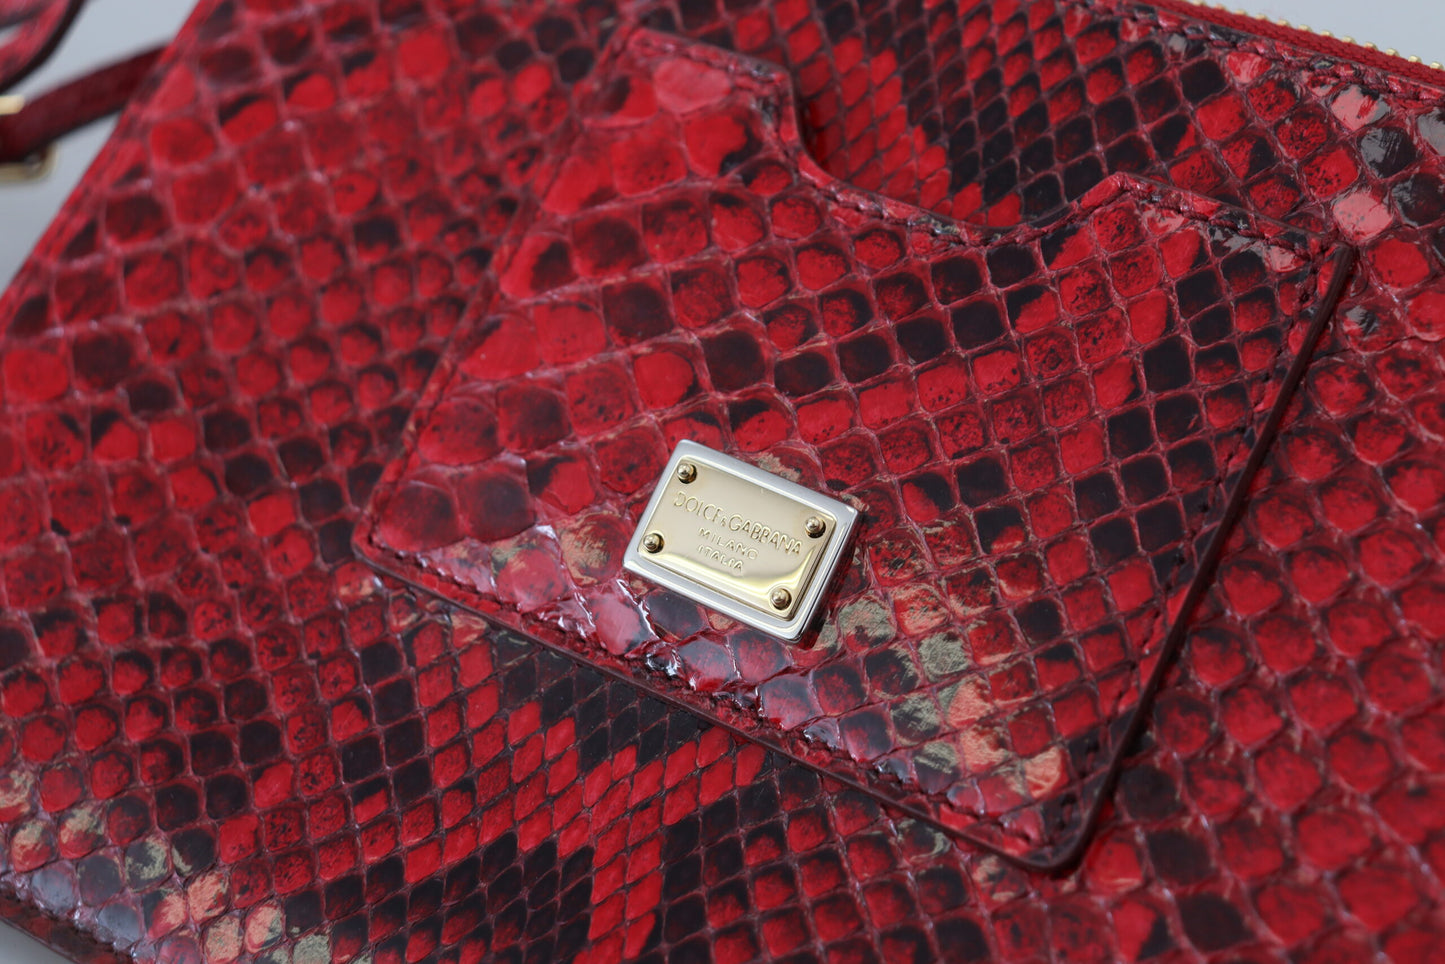 Dolce & Gabbana Red Leather Ayers Clutch Purse Wristlet Hand - DEA STILOSA MILANO